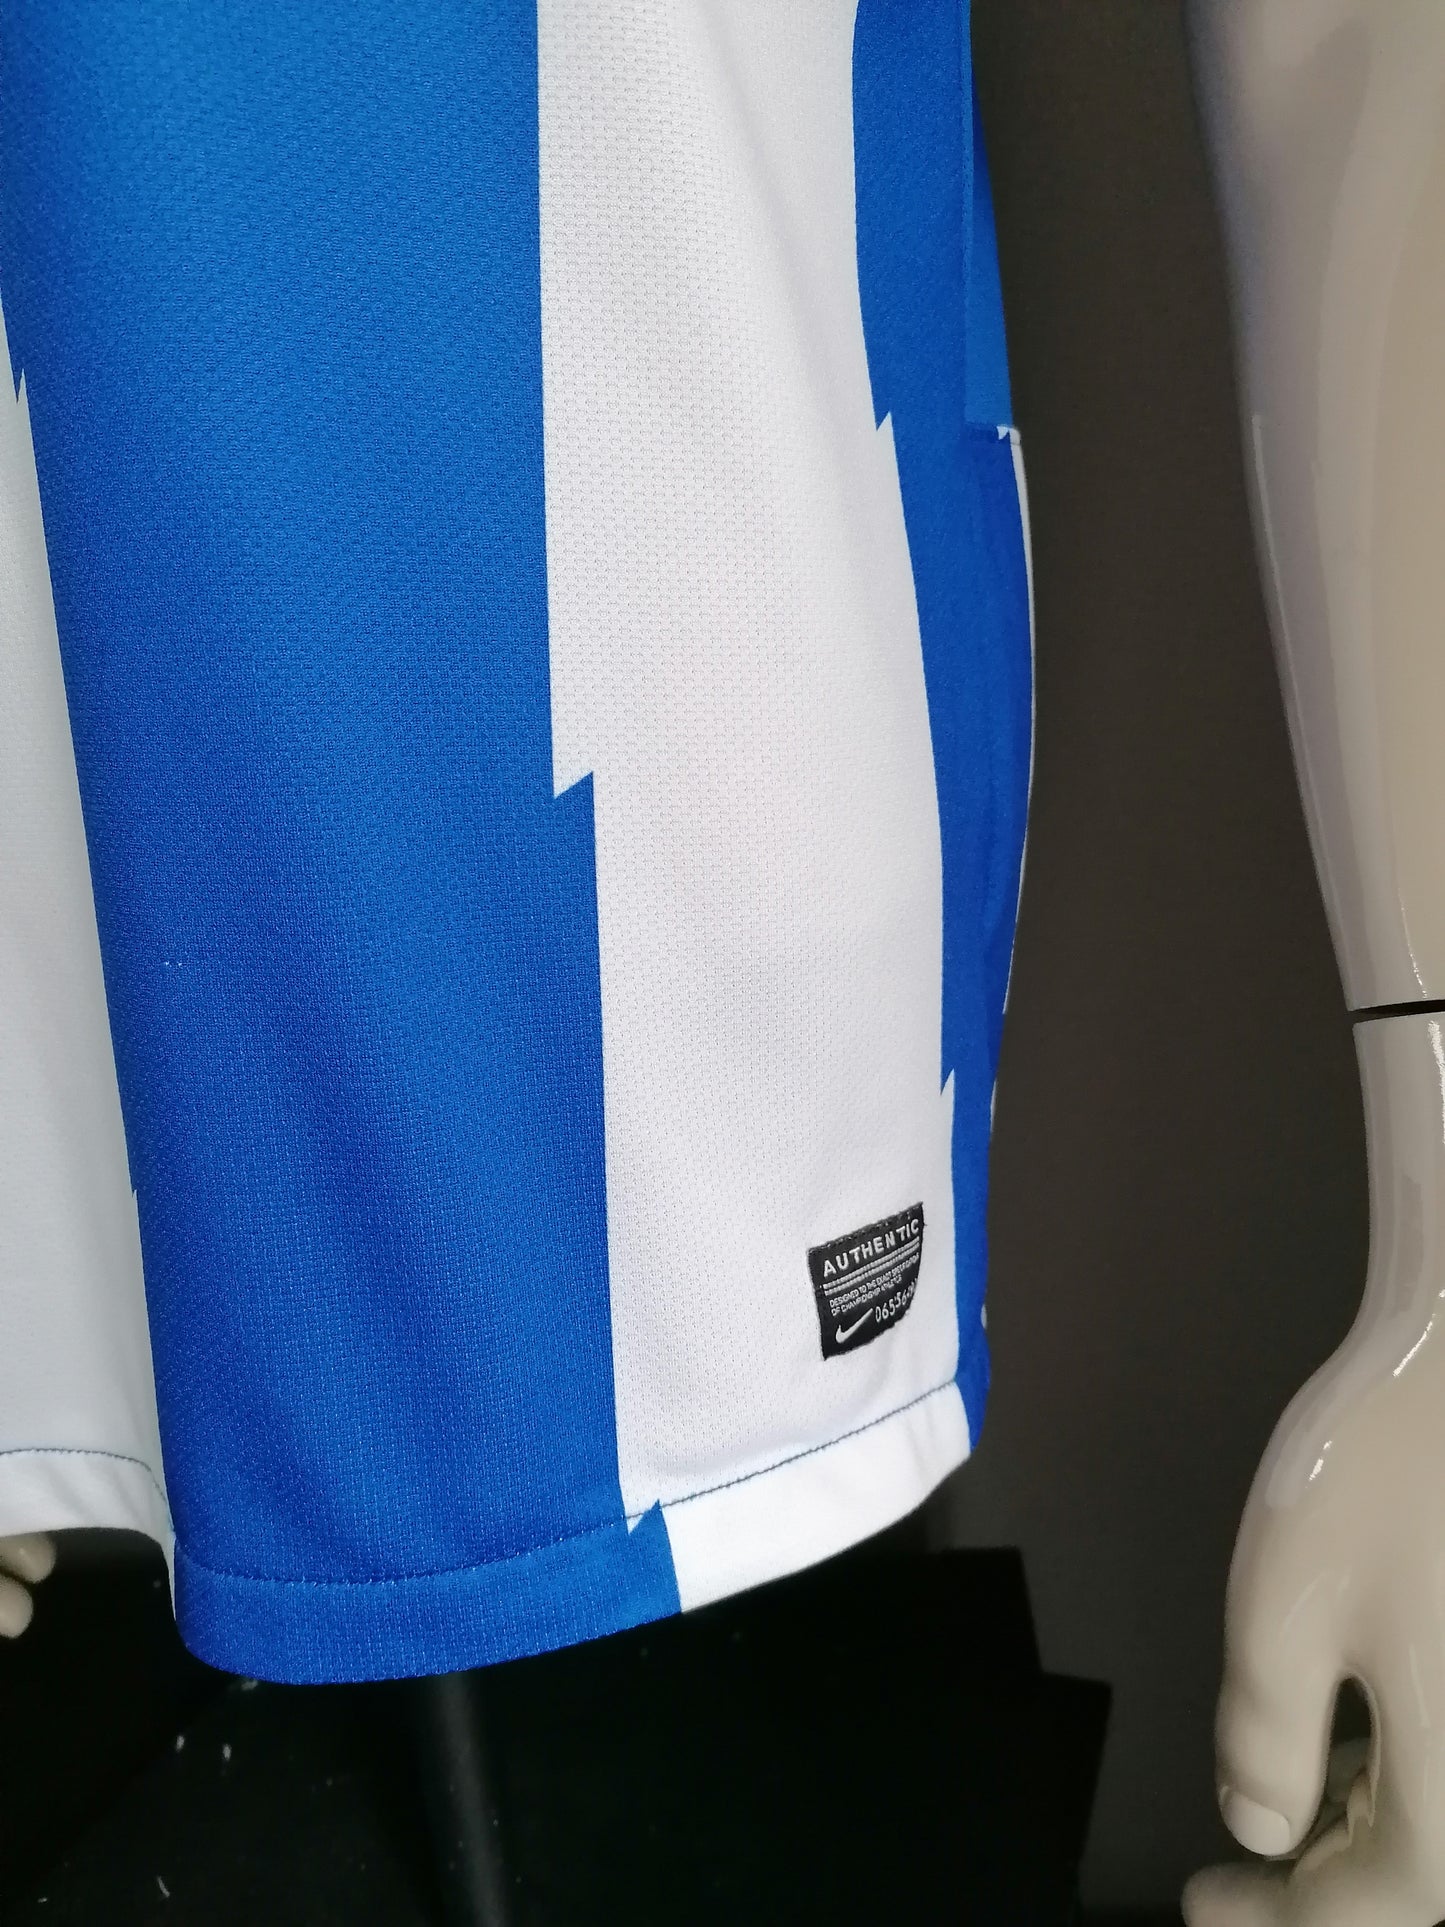 Nike voetbal sport shirt "Oroz". Blauw Wit motief. Maat L.